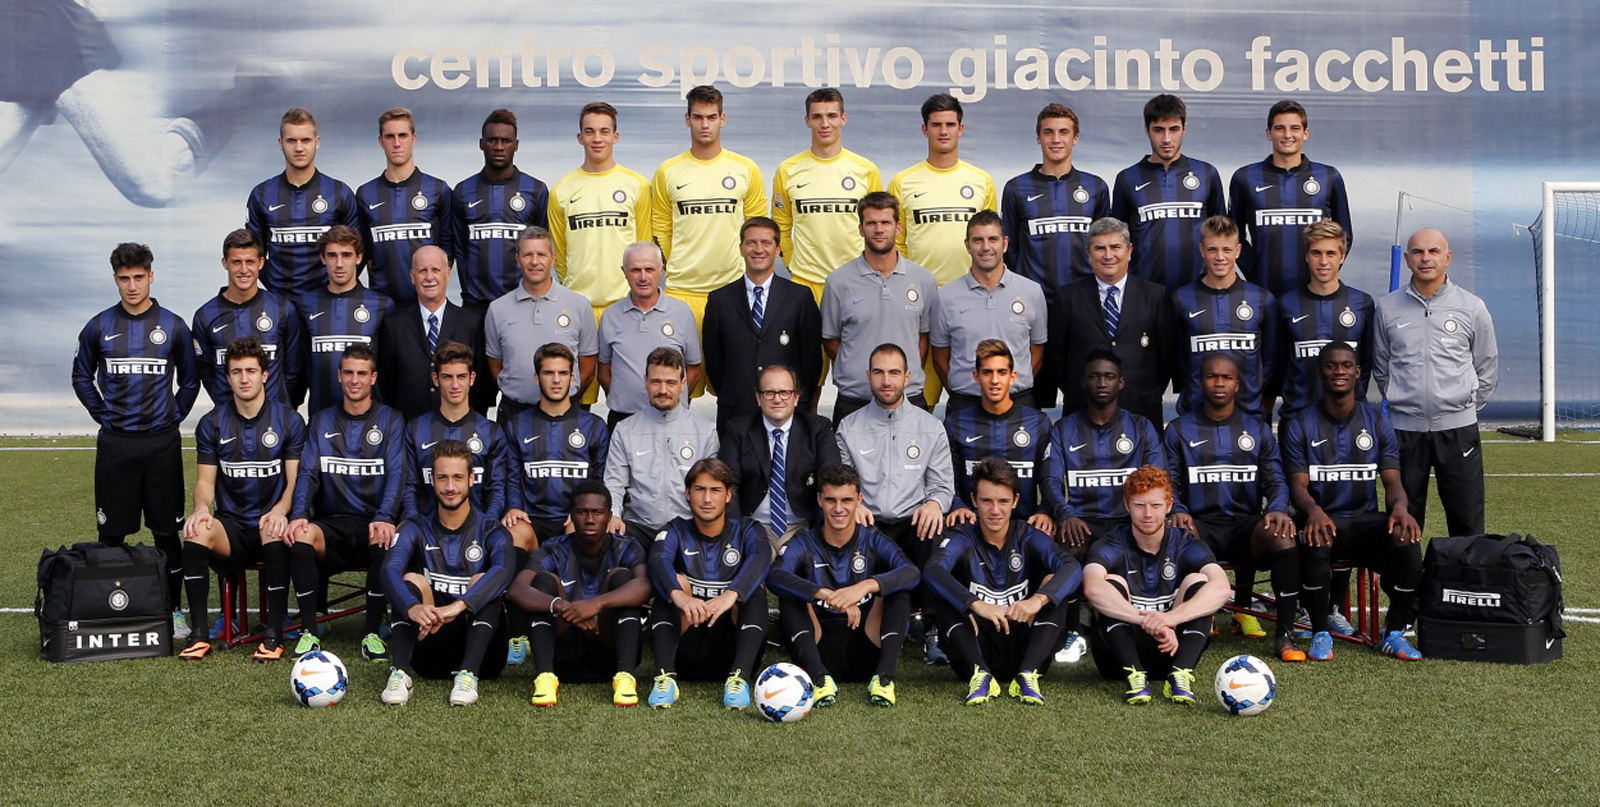 Inter Primavera to parade the Viareggio Cup tomorrow